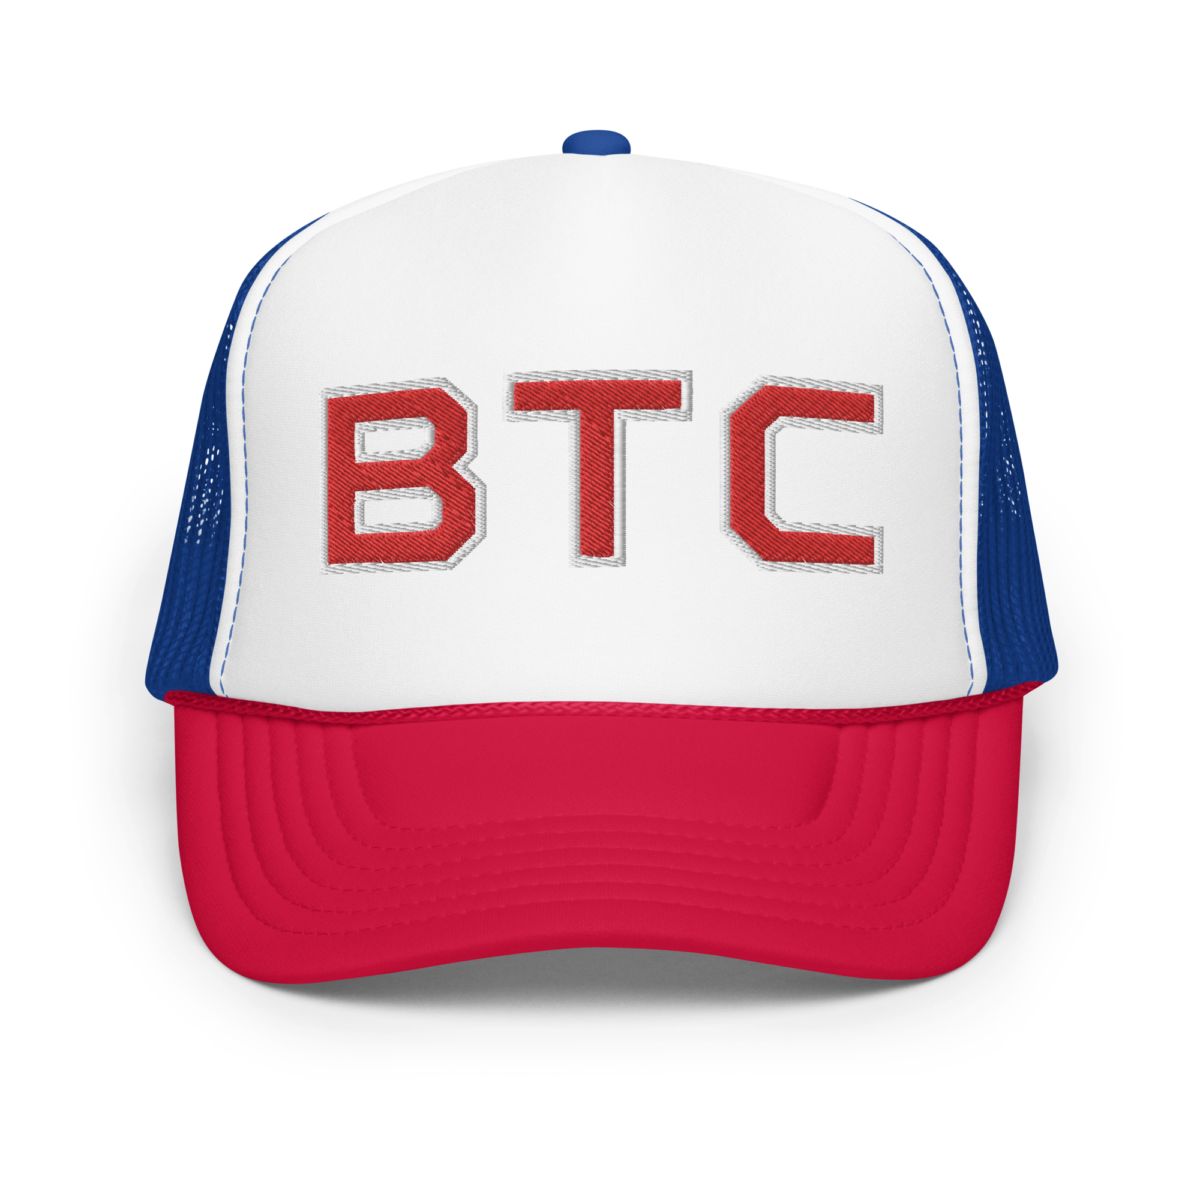 Bitcoin x BTC "Pepsi" Foam Trucker Hat